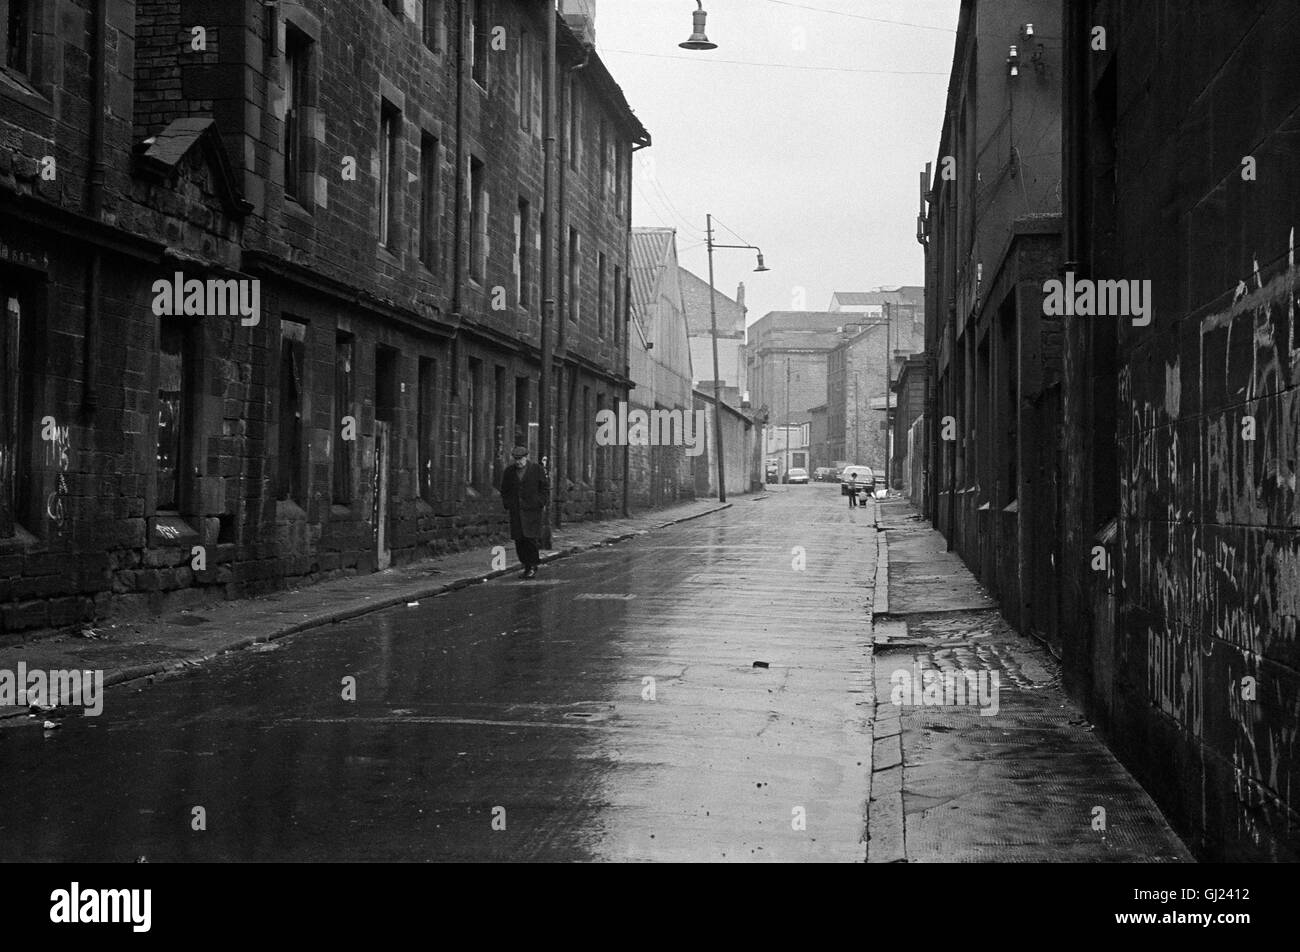 Man walking along wet street in Calton area of Glasgow East End, 1971 approx Stock Photo